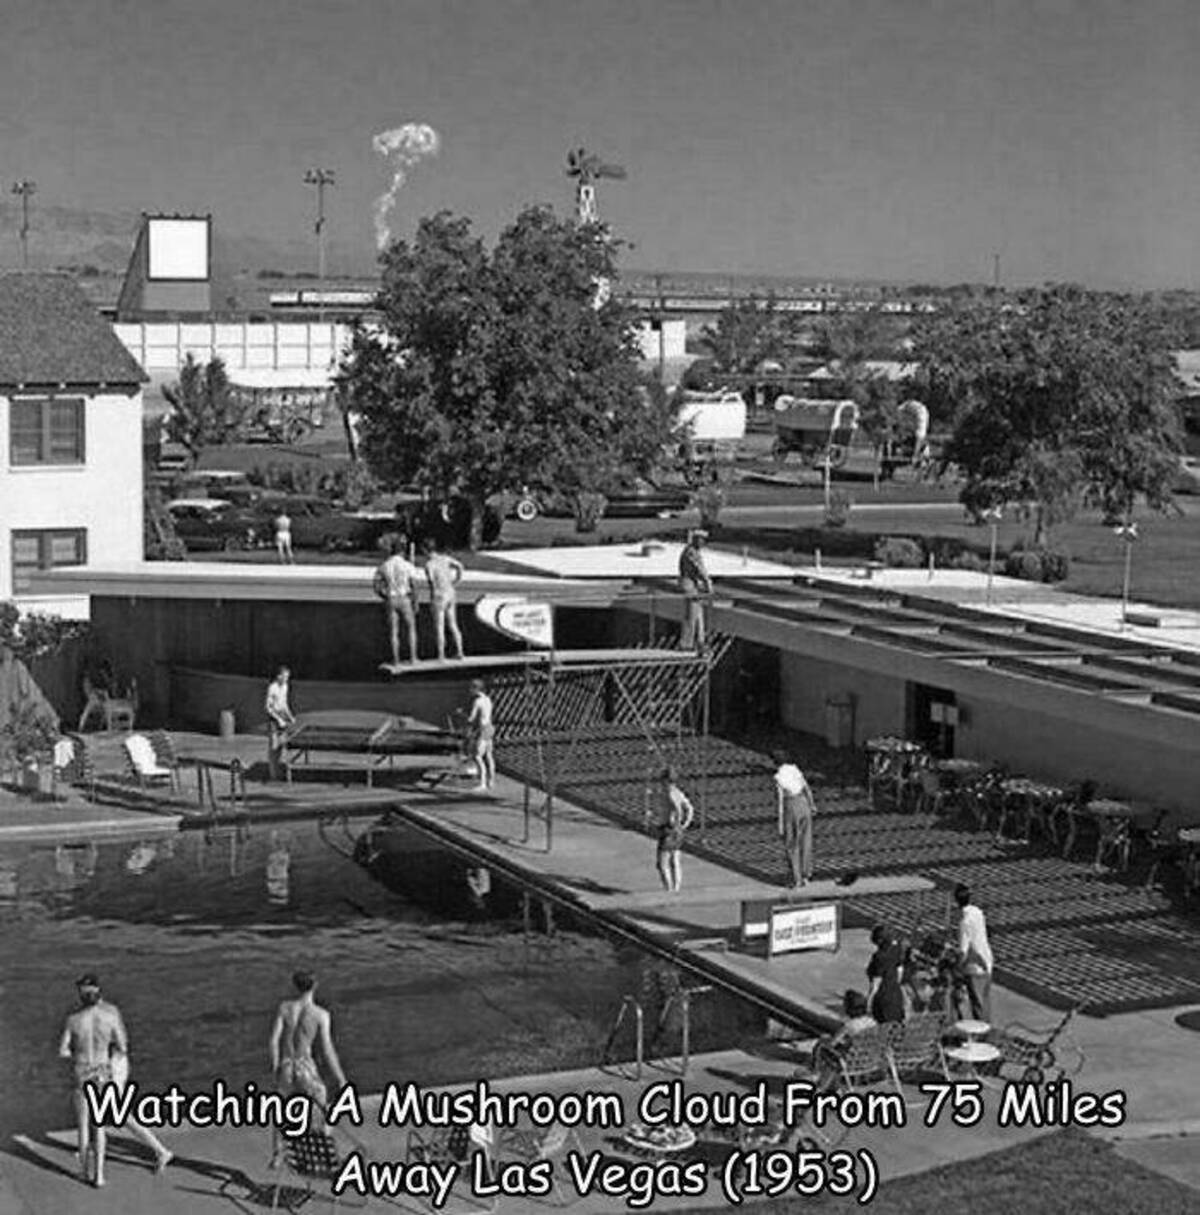 las vegas nuclear tourism - Watching A Mushroom Cloud From 75 Miles Away Las Vegas 1953